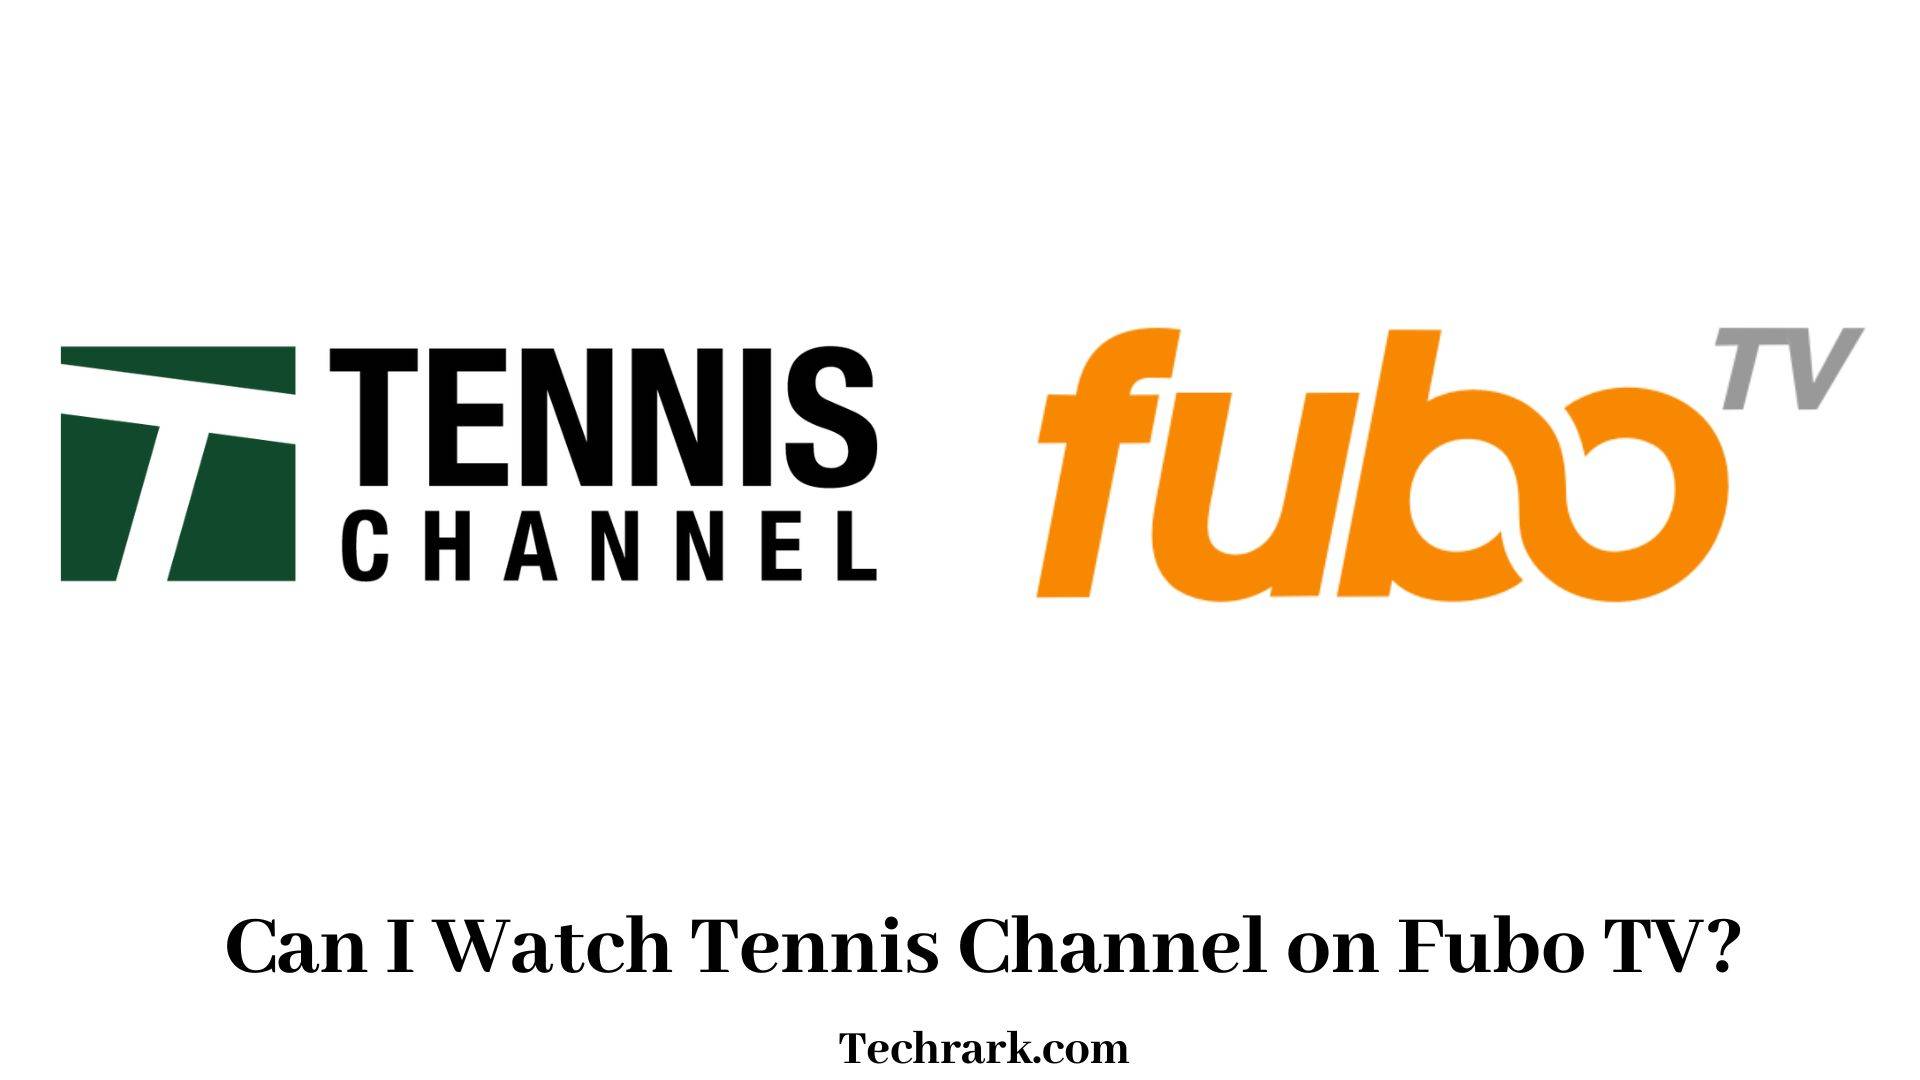 Tennis Channel on Fubo TV